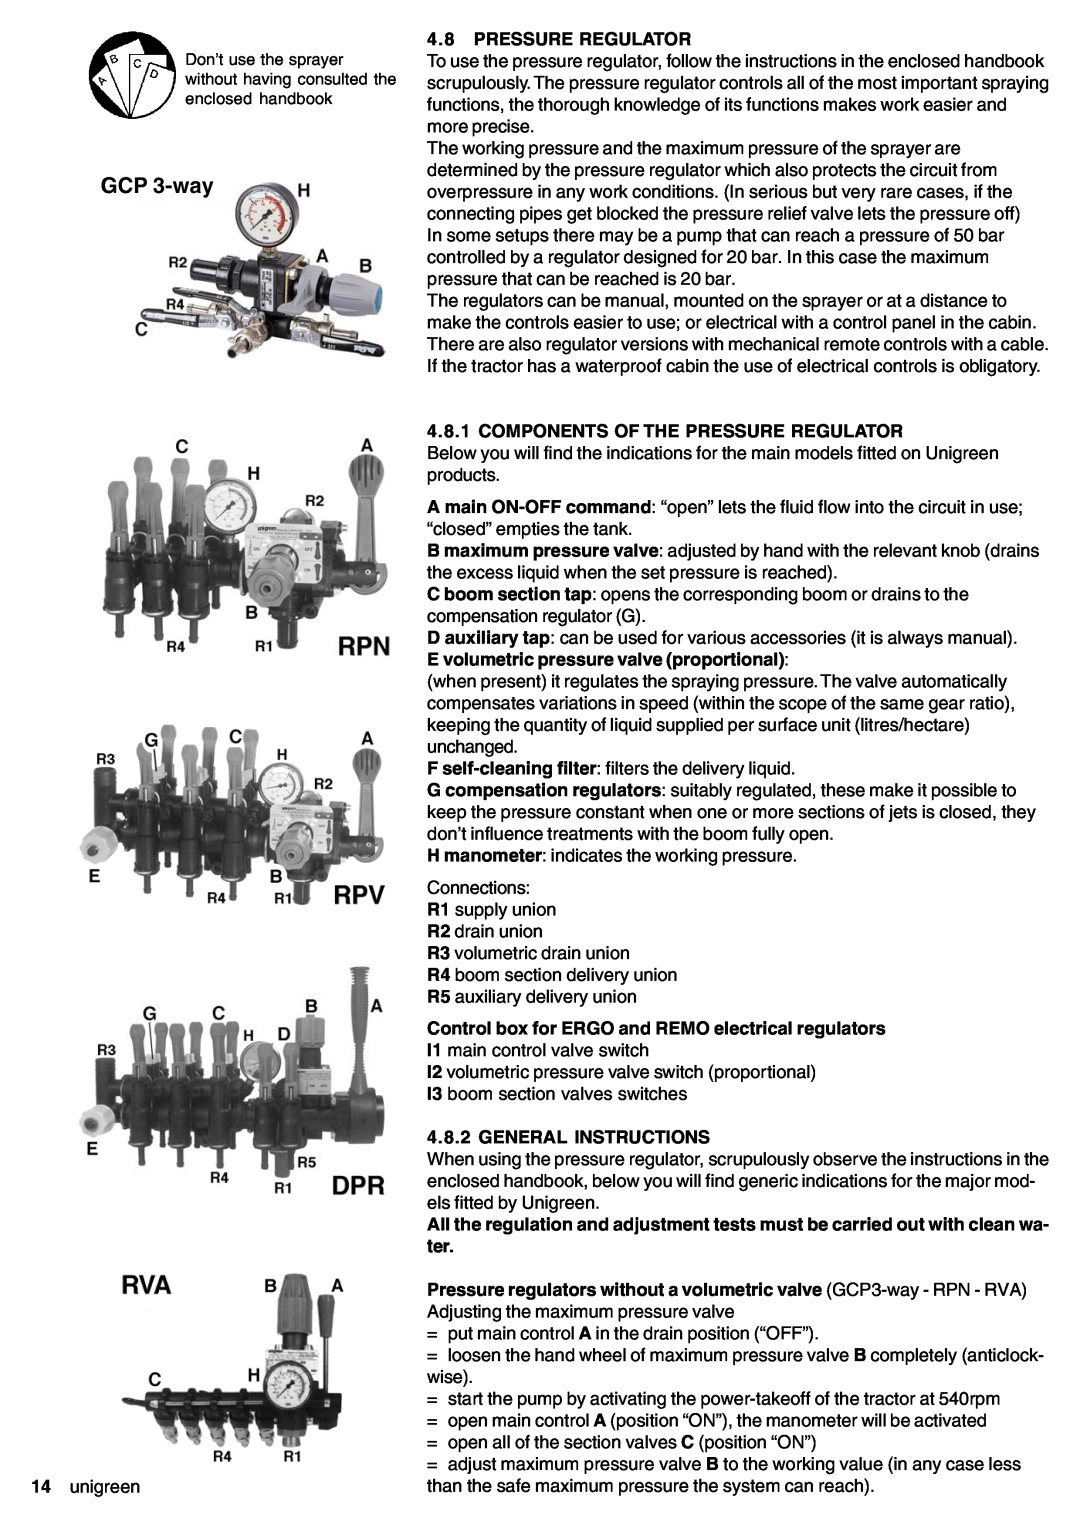 Unigreen 11, 22, 16, 32 manual GCP 3-way, 4.8PRESSURE REGULATOR, Components Of The Pressure Regulator, General Instructions 